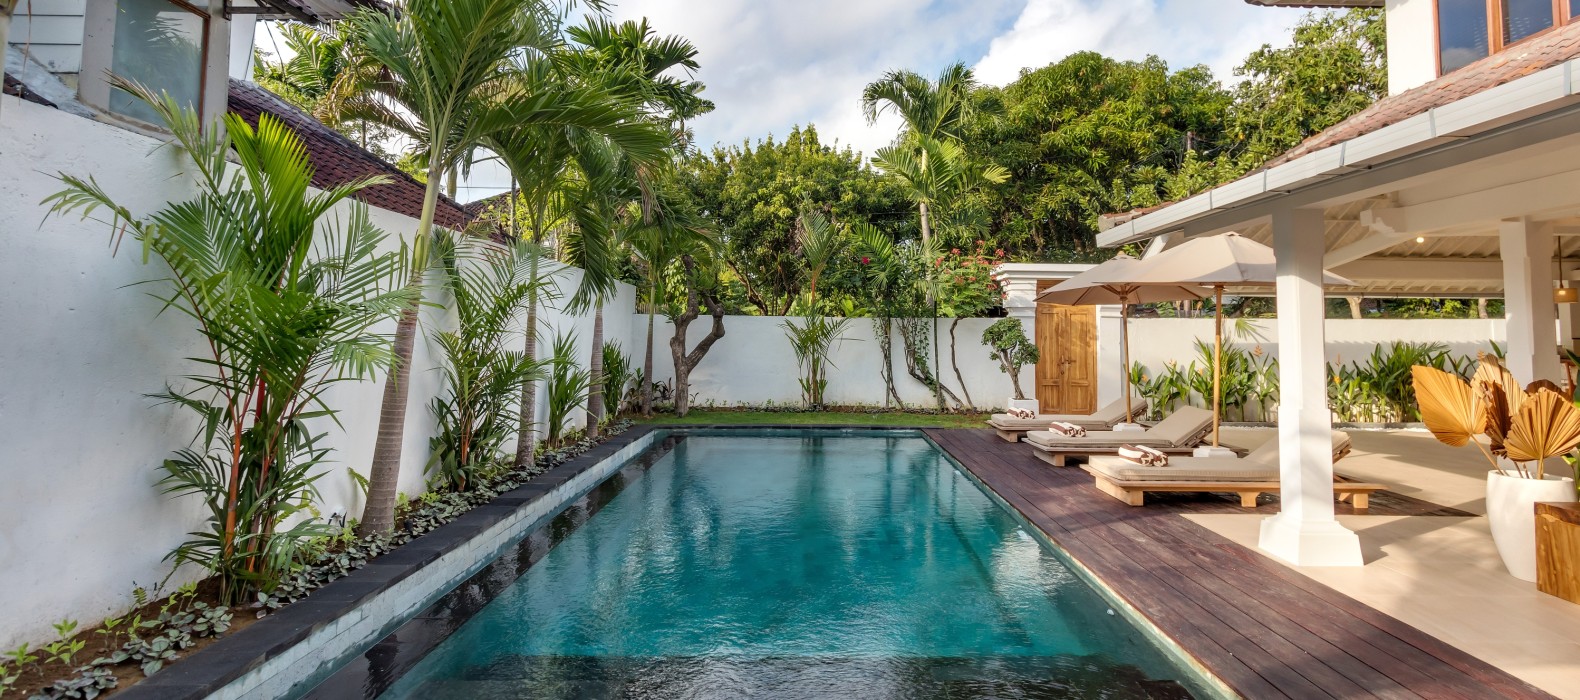 Exterior pool of Villa Lisabella in Bali